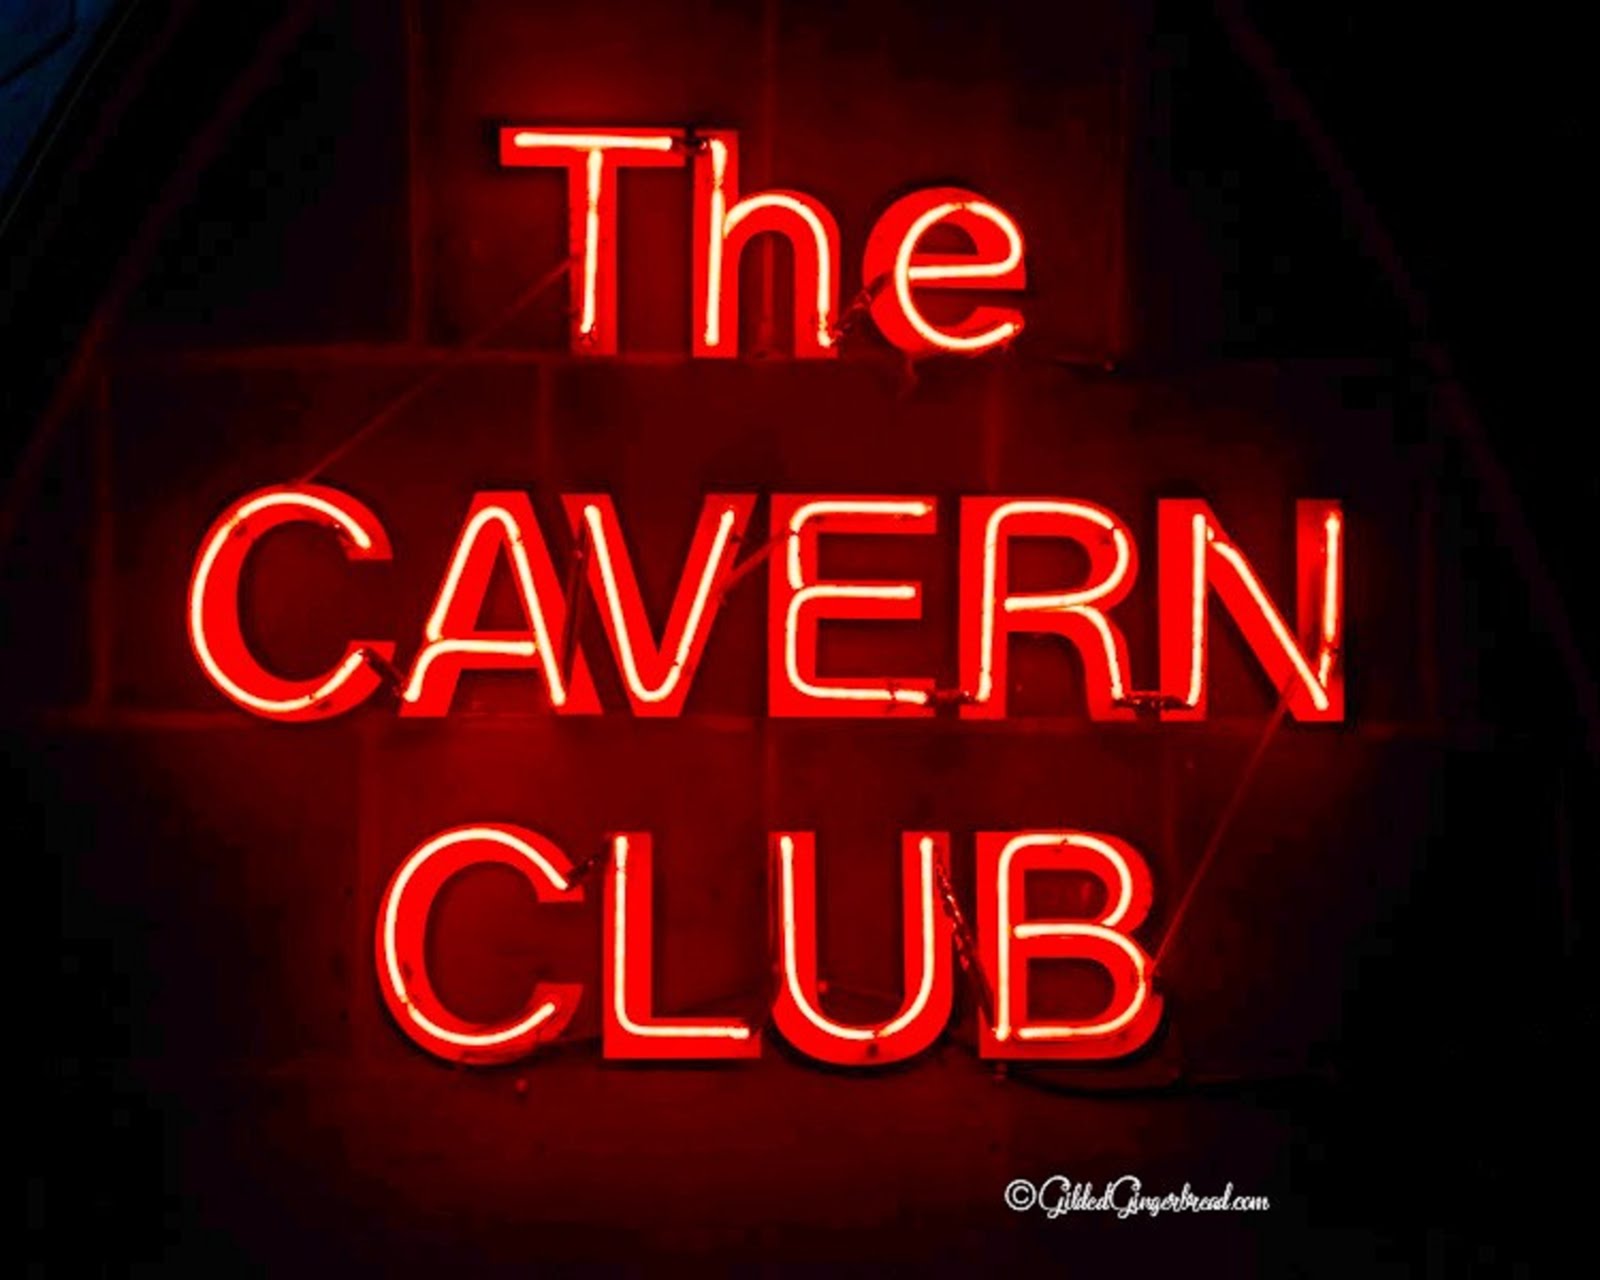 THE CAVERN CLUB   LIVERPOOL, ENGLAND